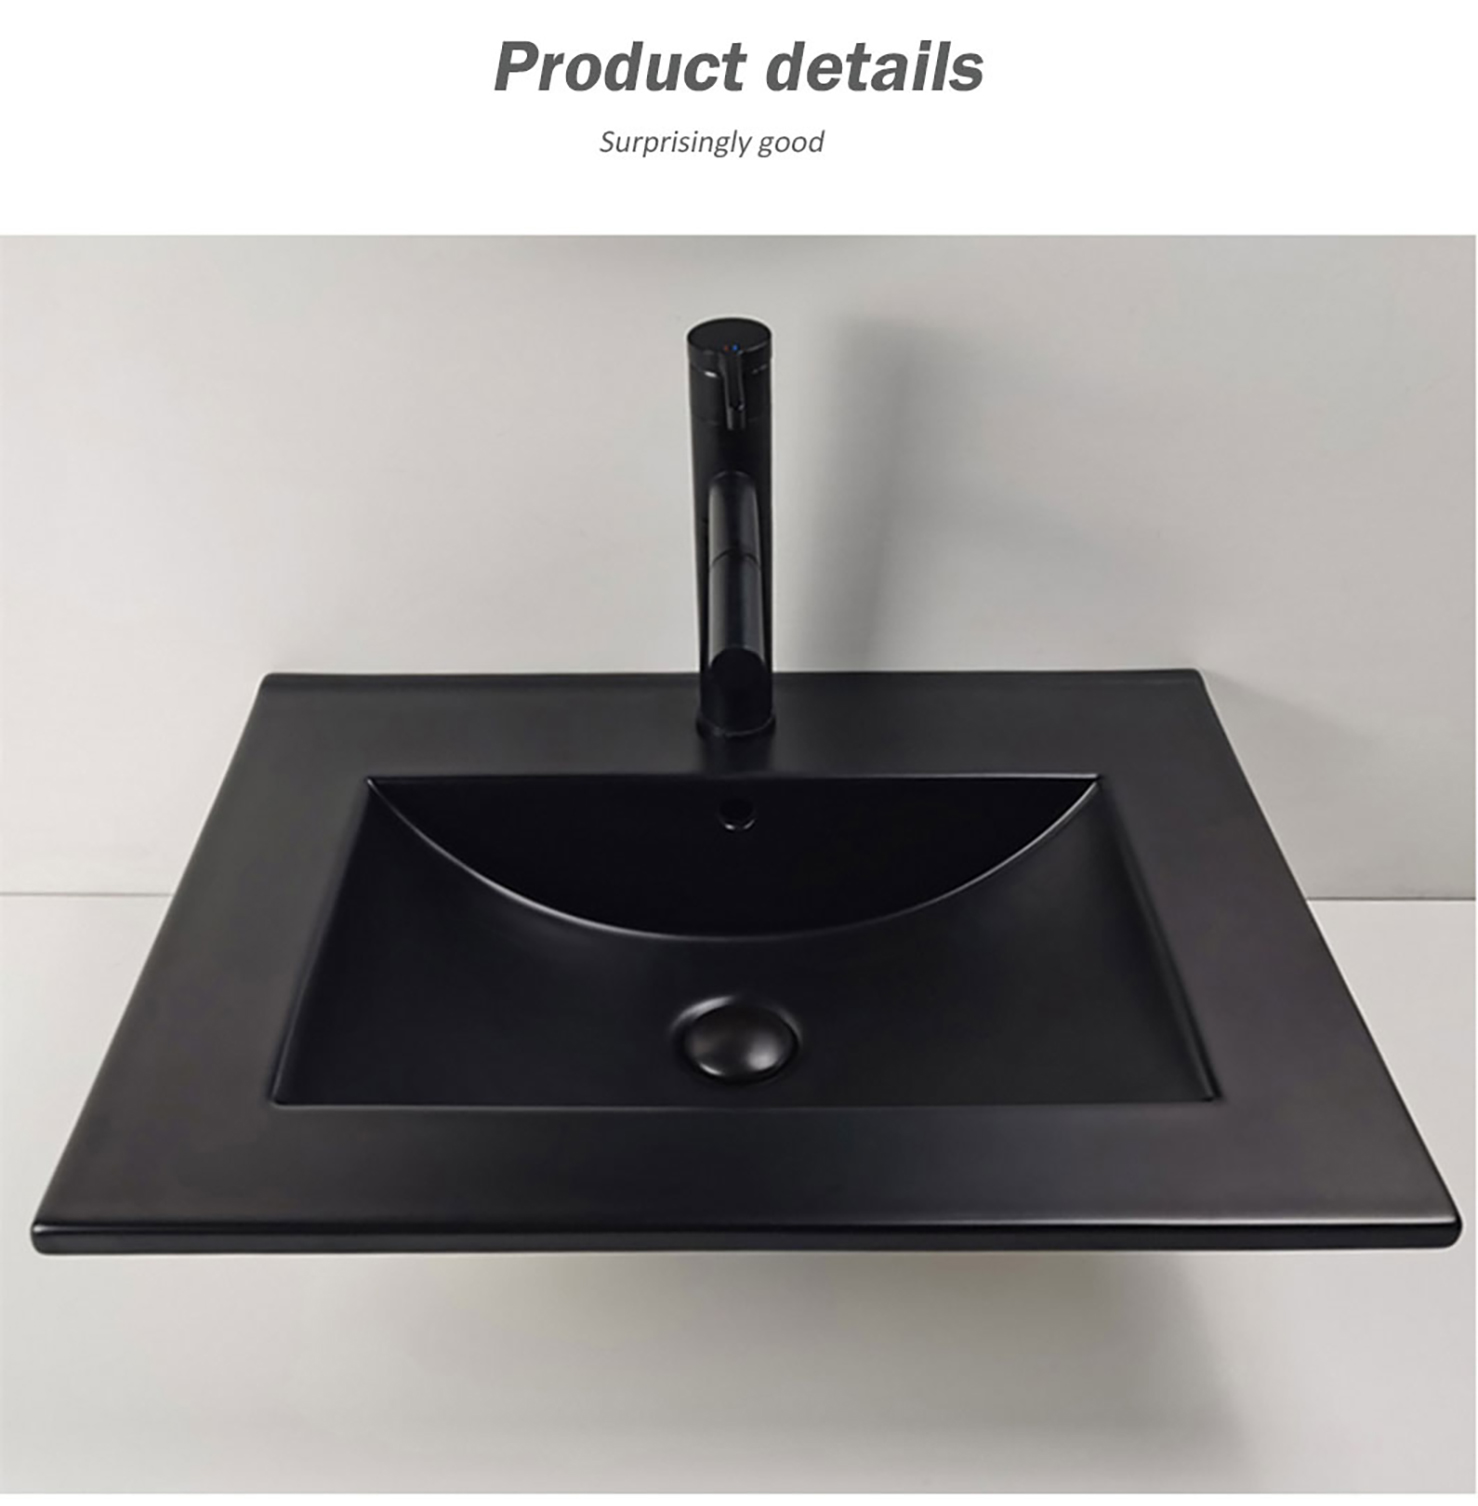 Õhukese servaga matt kraanikauss Stiilne keraamiline vannitoakapp Waschbecken Keramik lauaplaat, must vanity valamu (6)